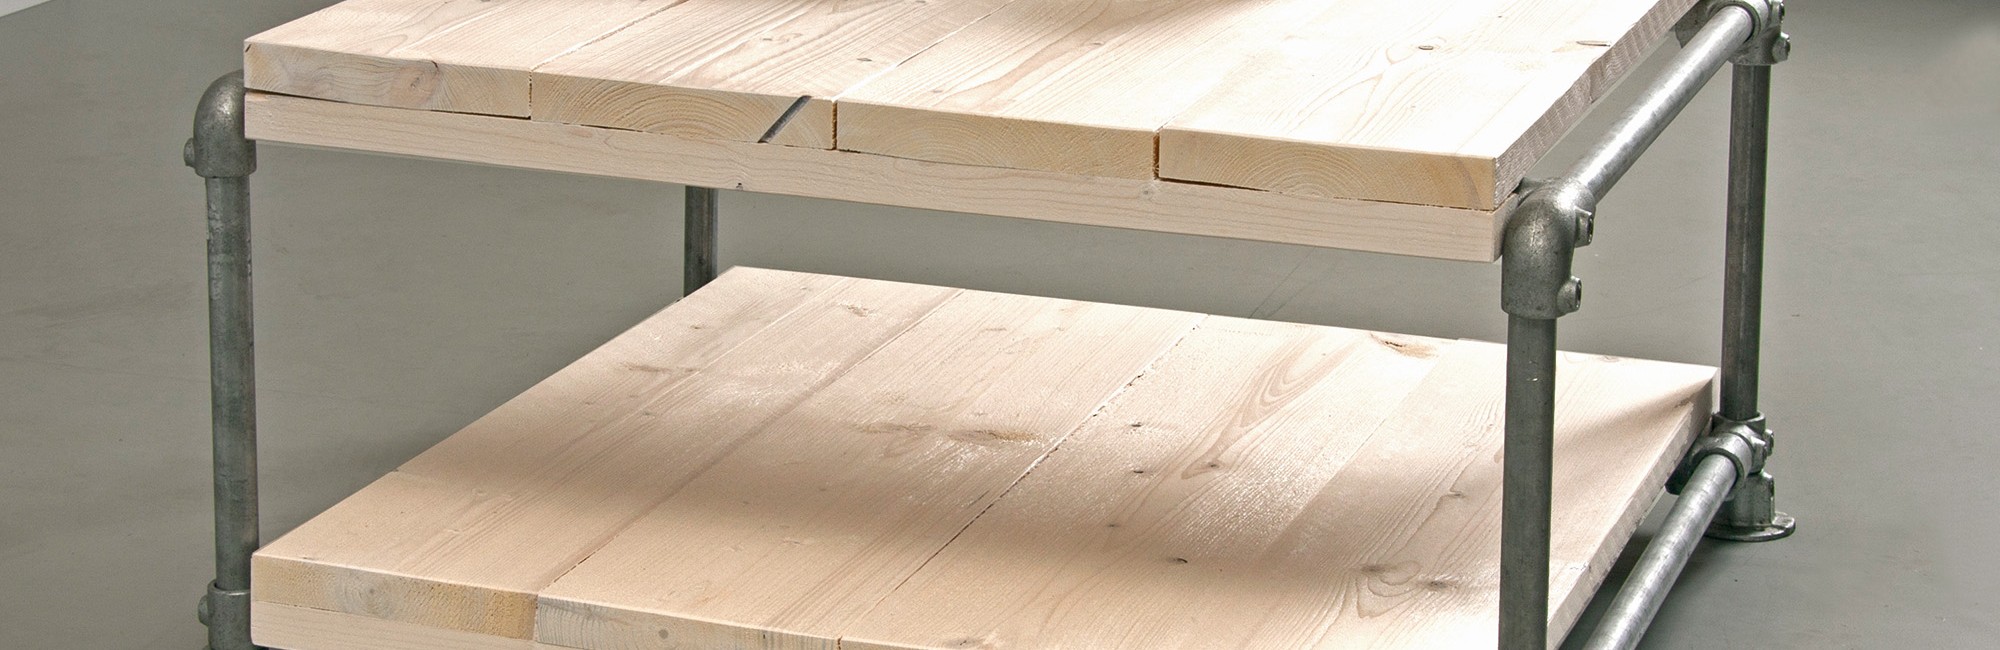 Fonkelnieuw Op eigen houtje meubels maken - Hornbach Newsroom GY-47